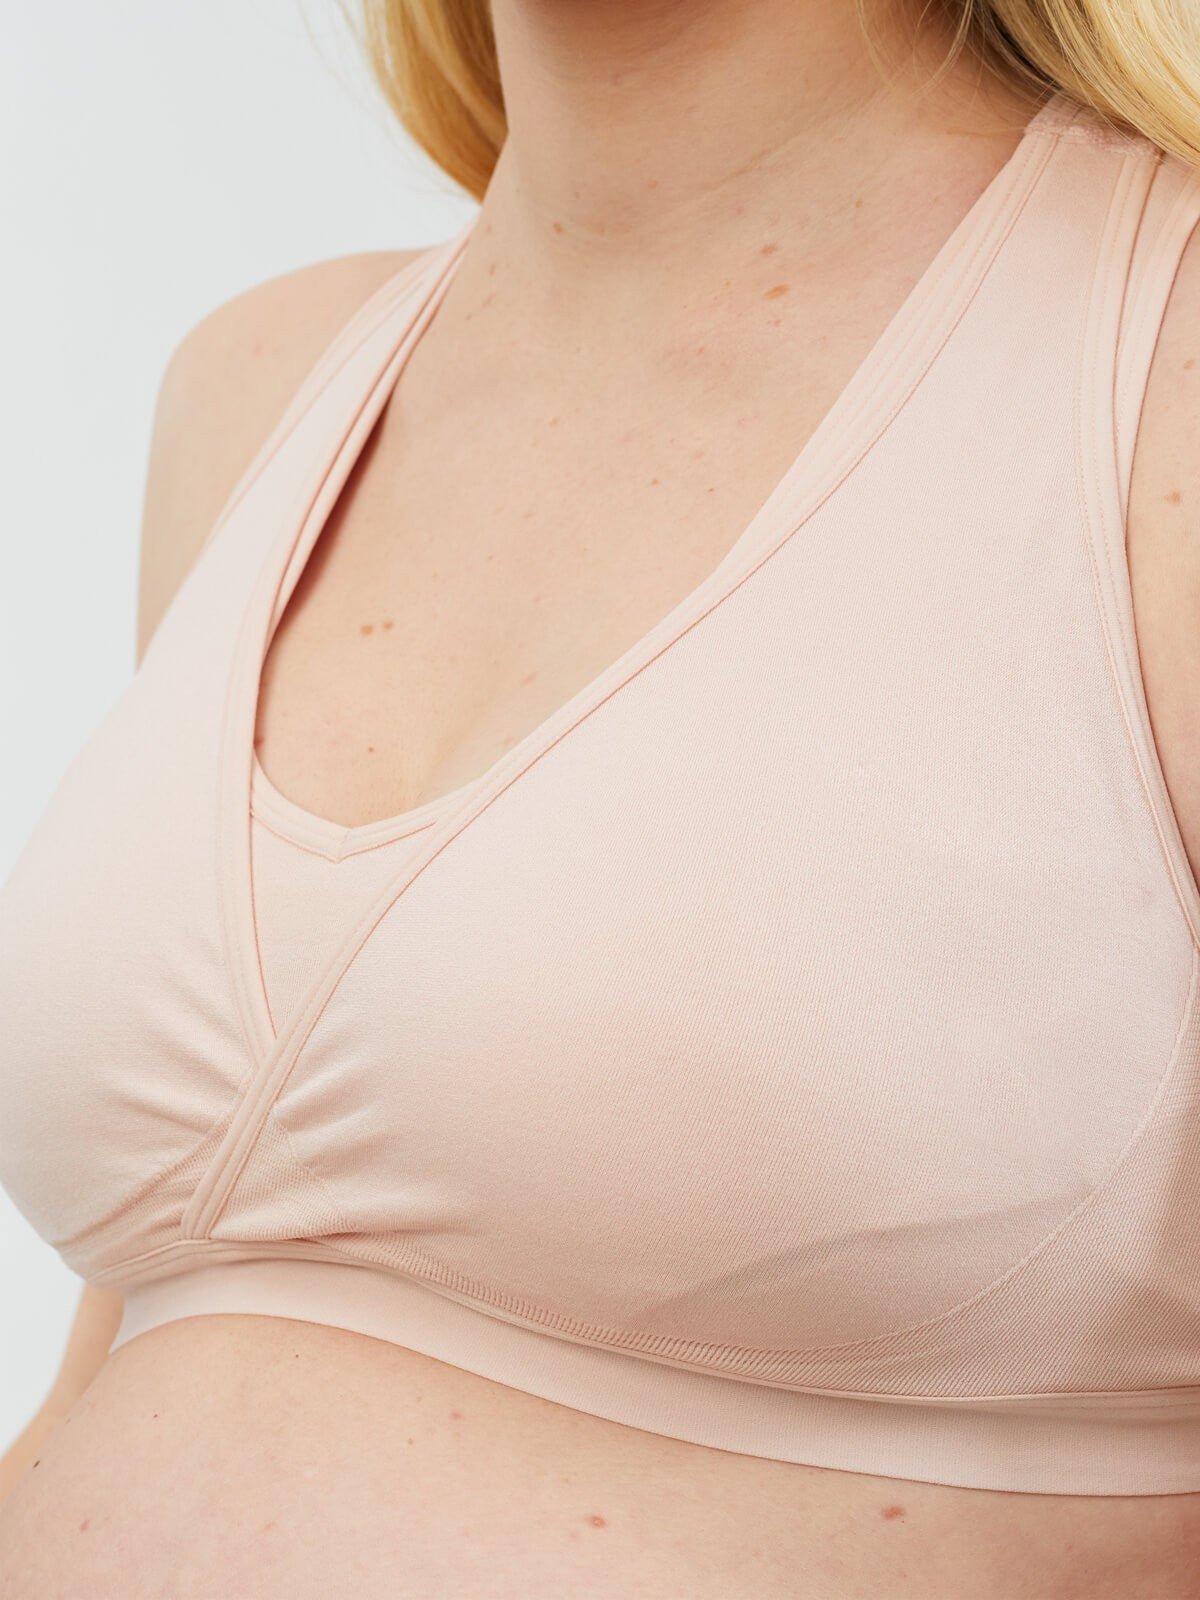 Women Nursing Pumping Bra ,Handsfree Breast Feeding Bra Three Position Hook  and Eye Closure Pregnant Underwear Bra 